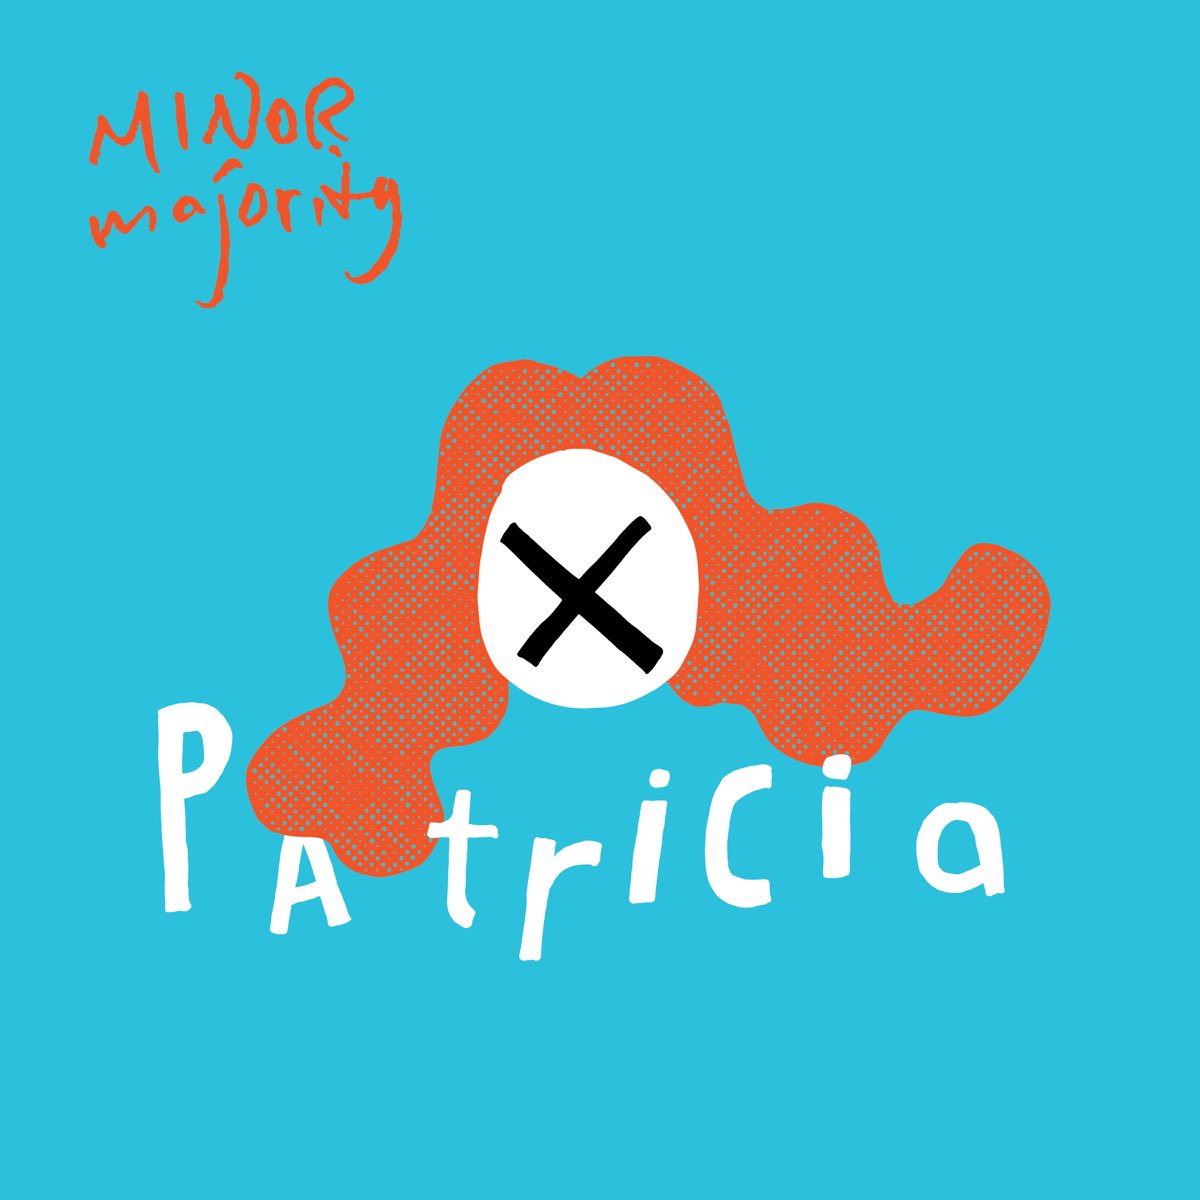 Patricia Major. Minor majority видео. Listen to pat